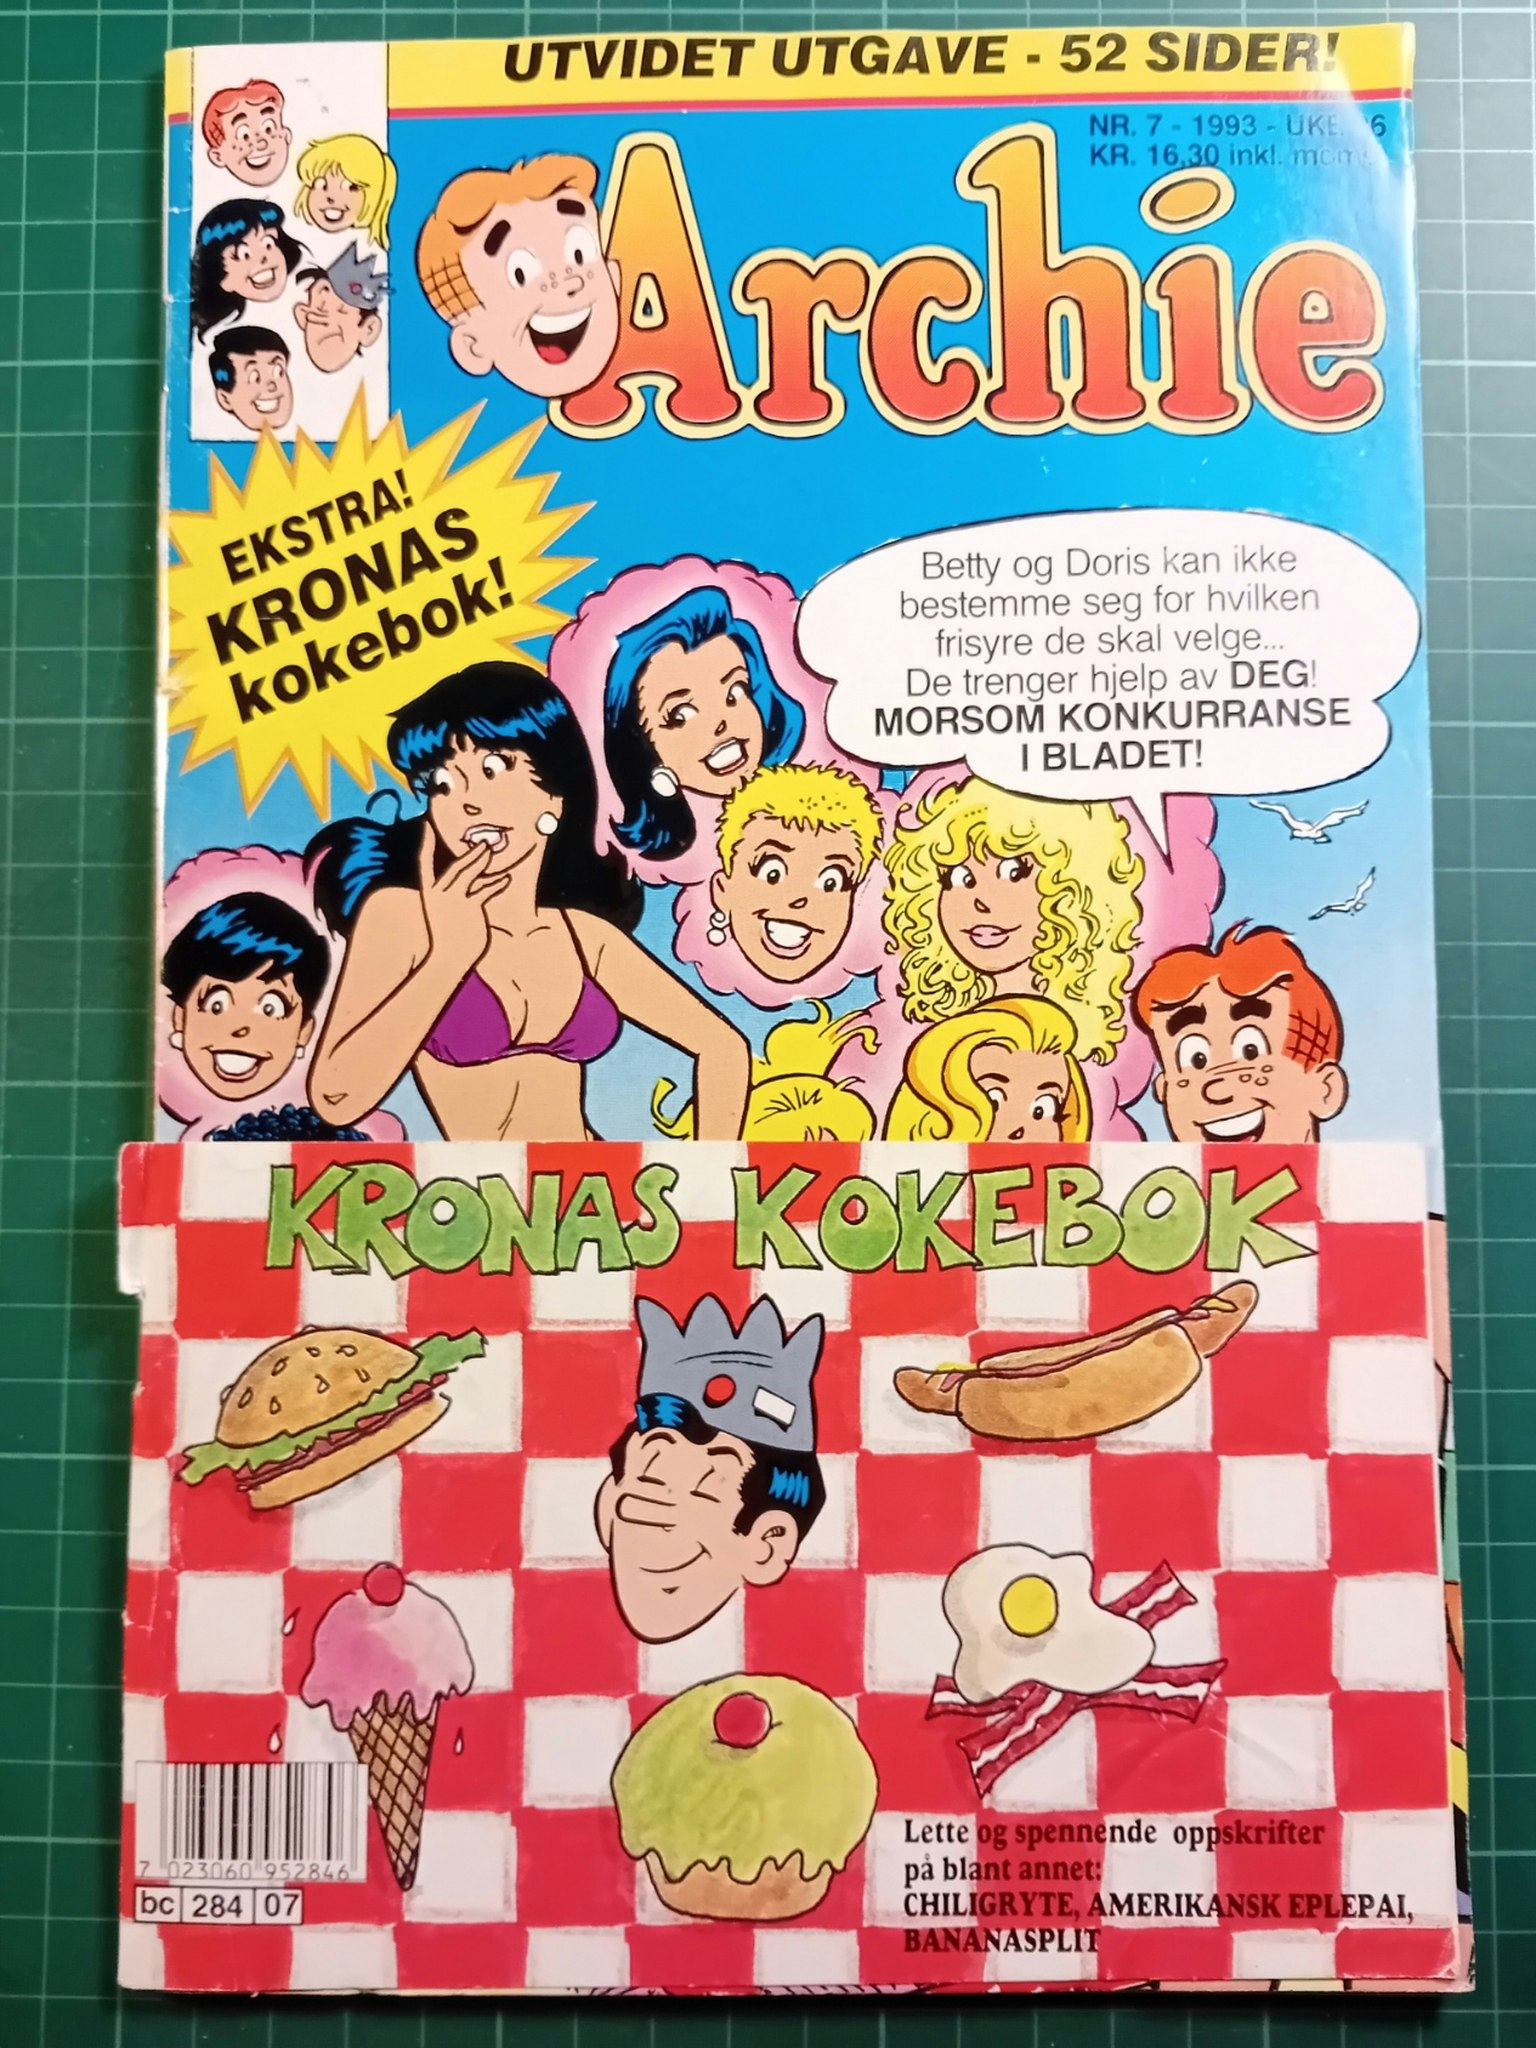 Archie 1993 - 07